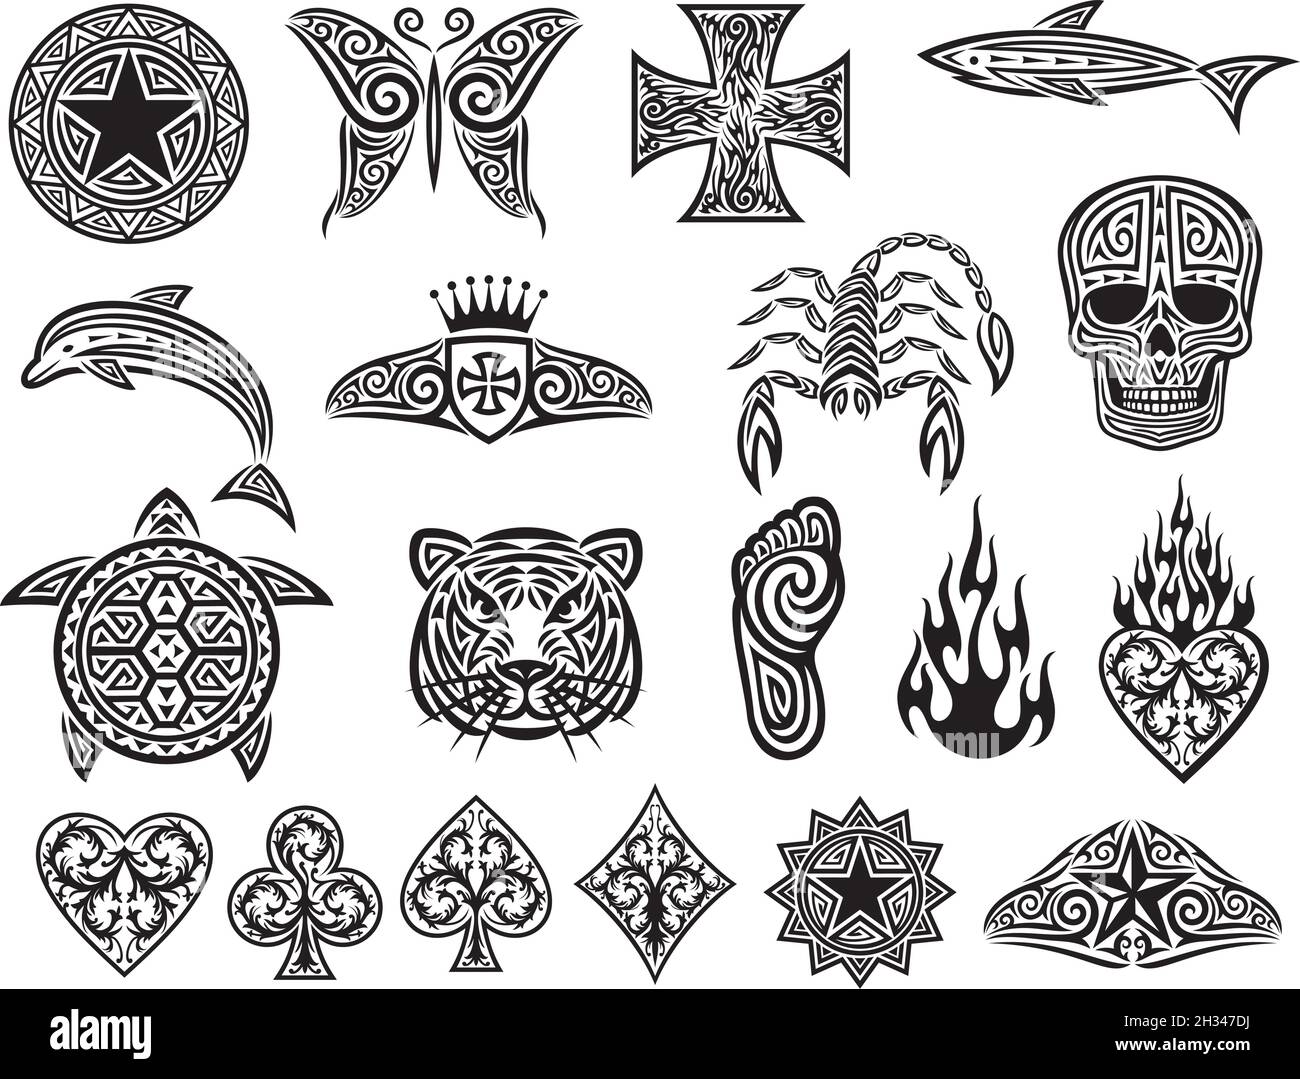 Tattoo tribal icons set vector illustration Stock Vector